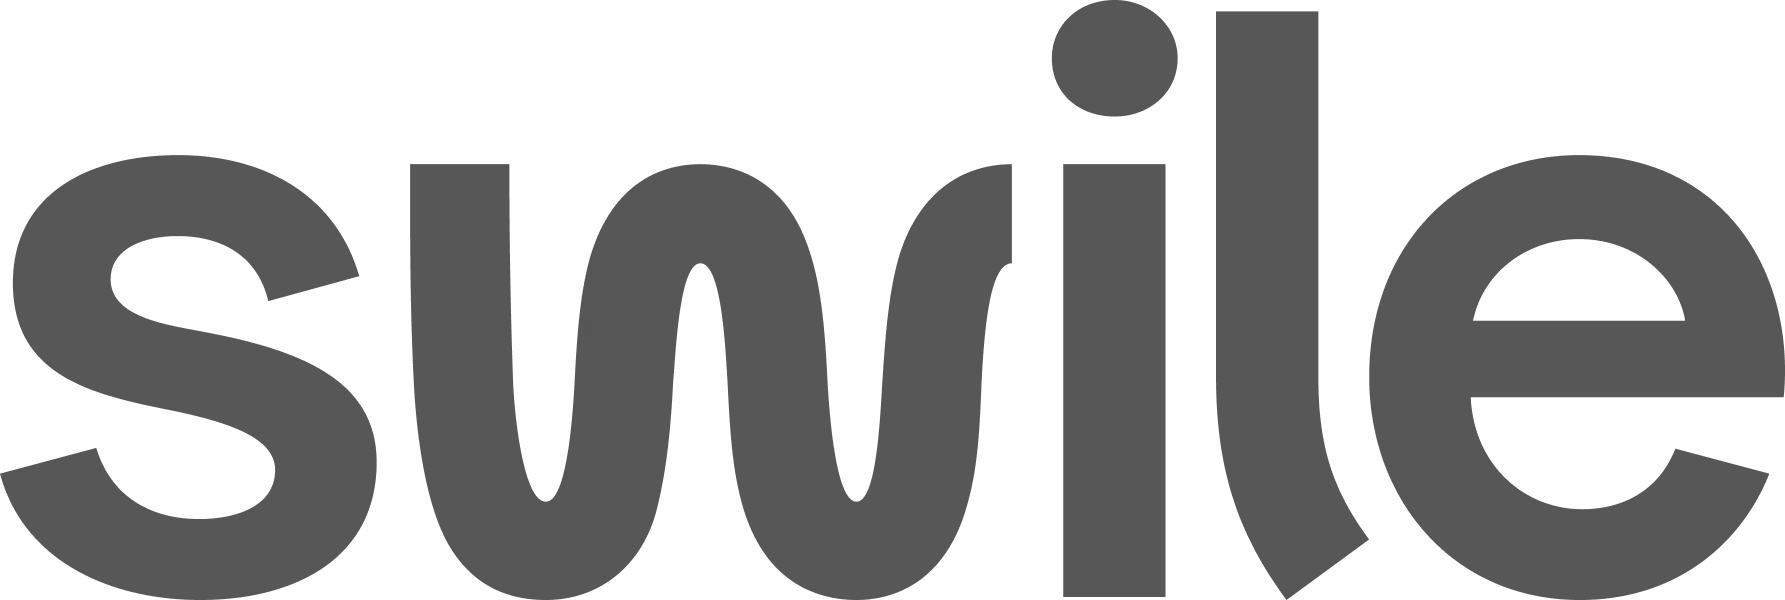 Swile Logo b/w